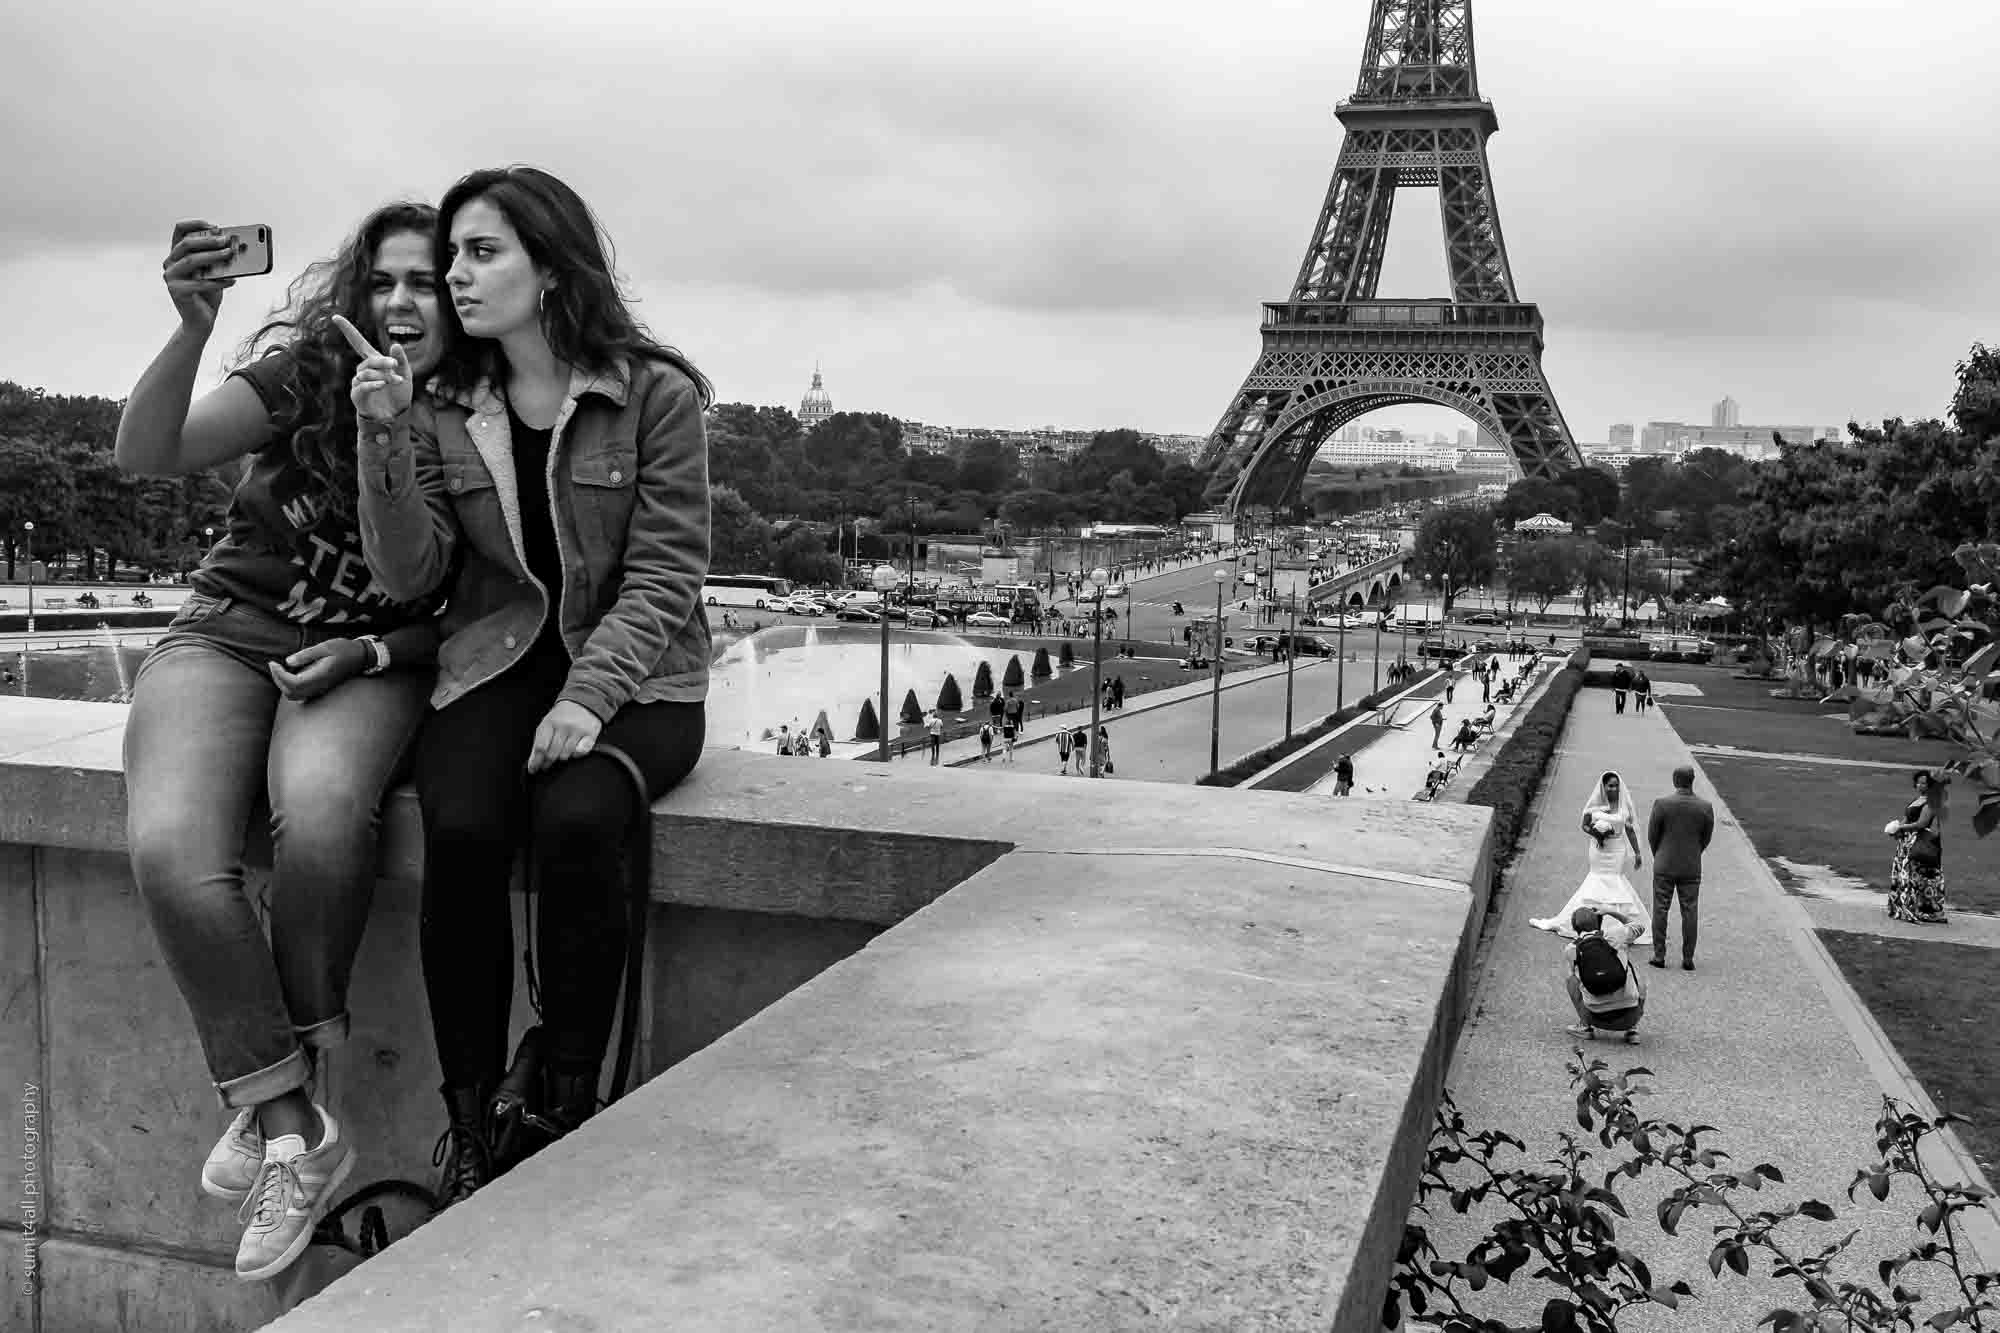 A Fun Scene Overlooking the Eiffel Tower in Paris